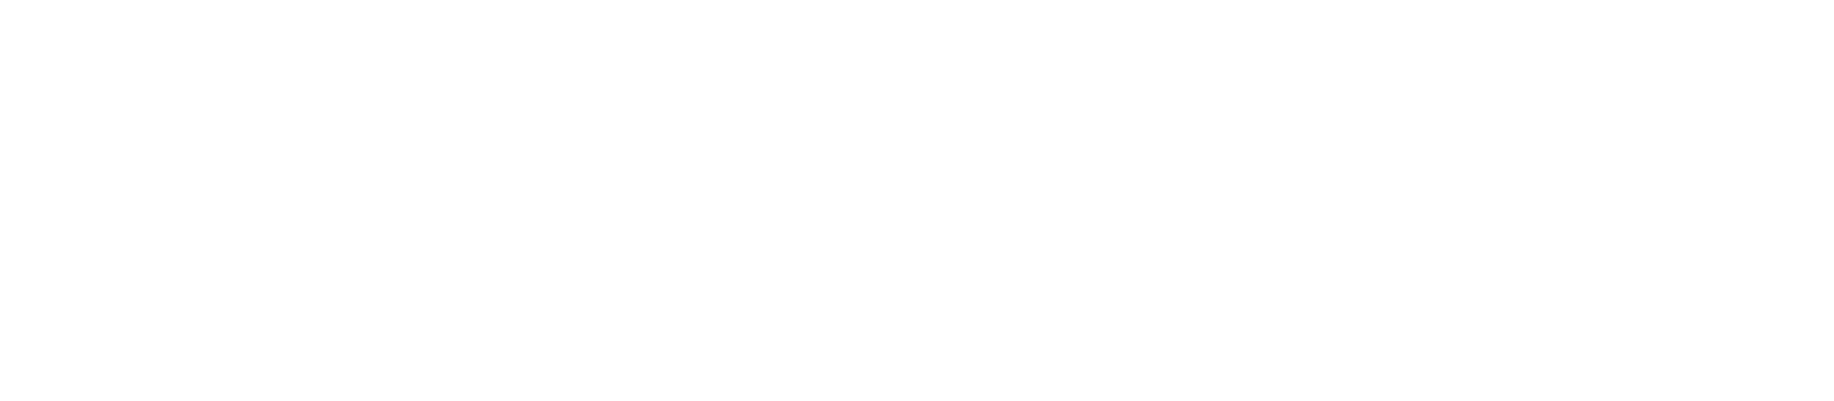 Cortex Automation Systems Logo White